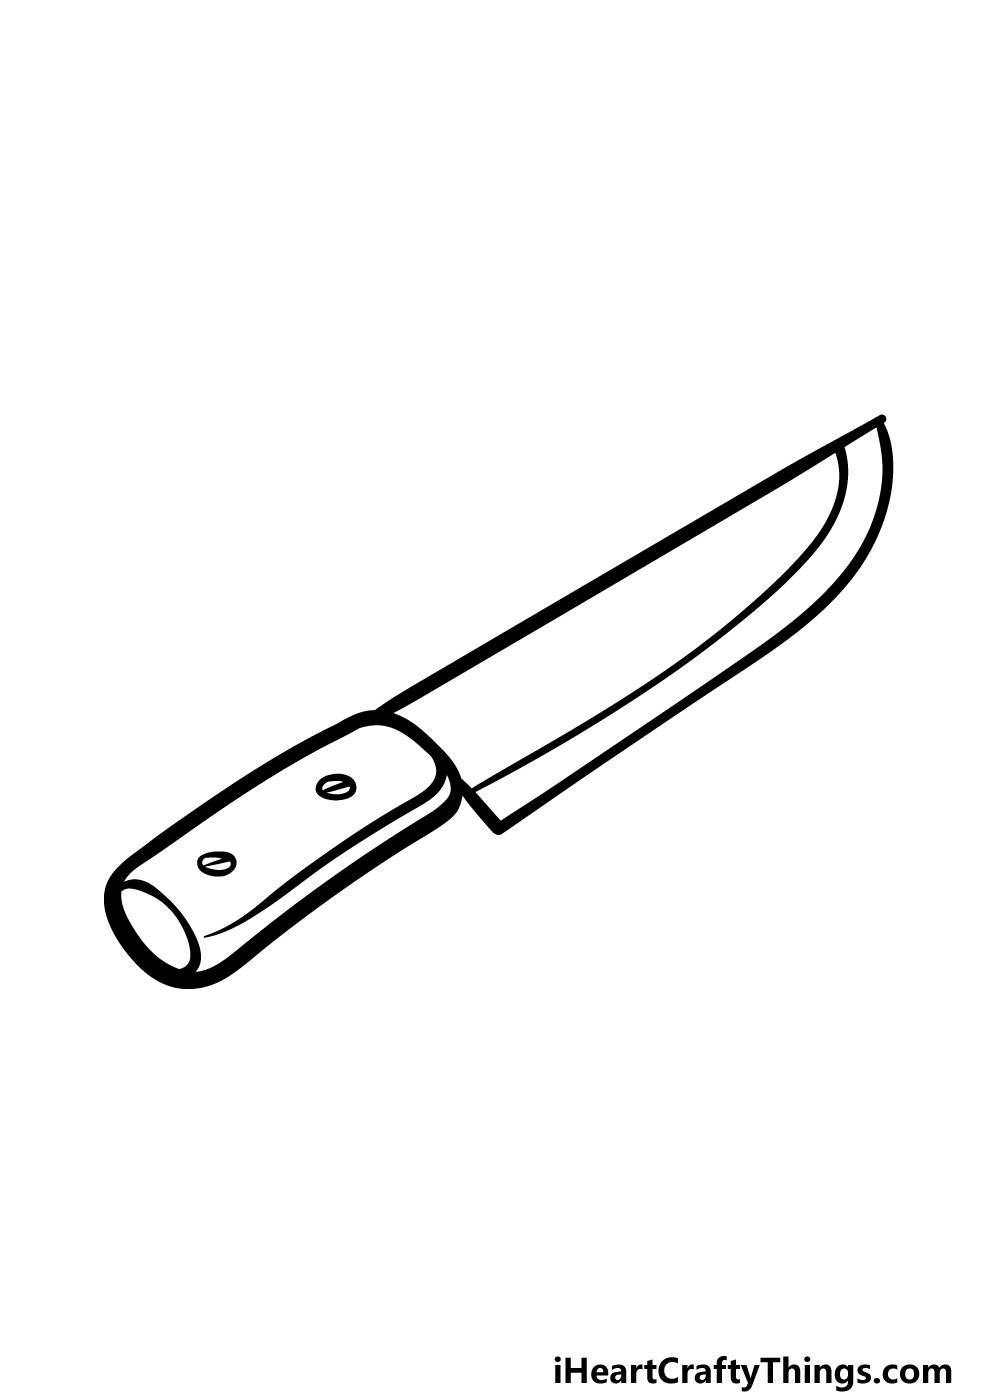 Cartoon Knife Drawing - How To Draw A Cartoon Knife Step By Step